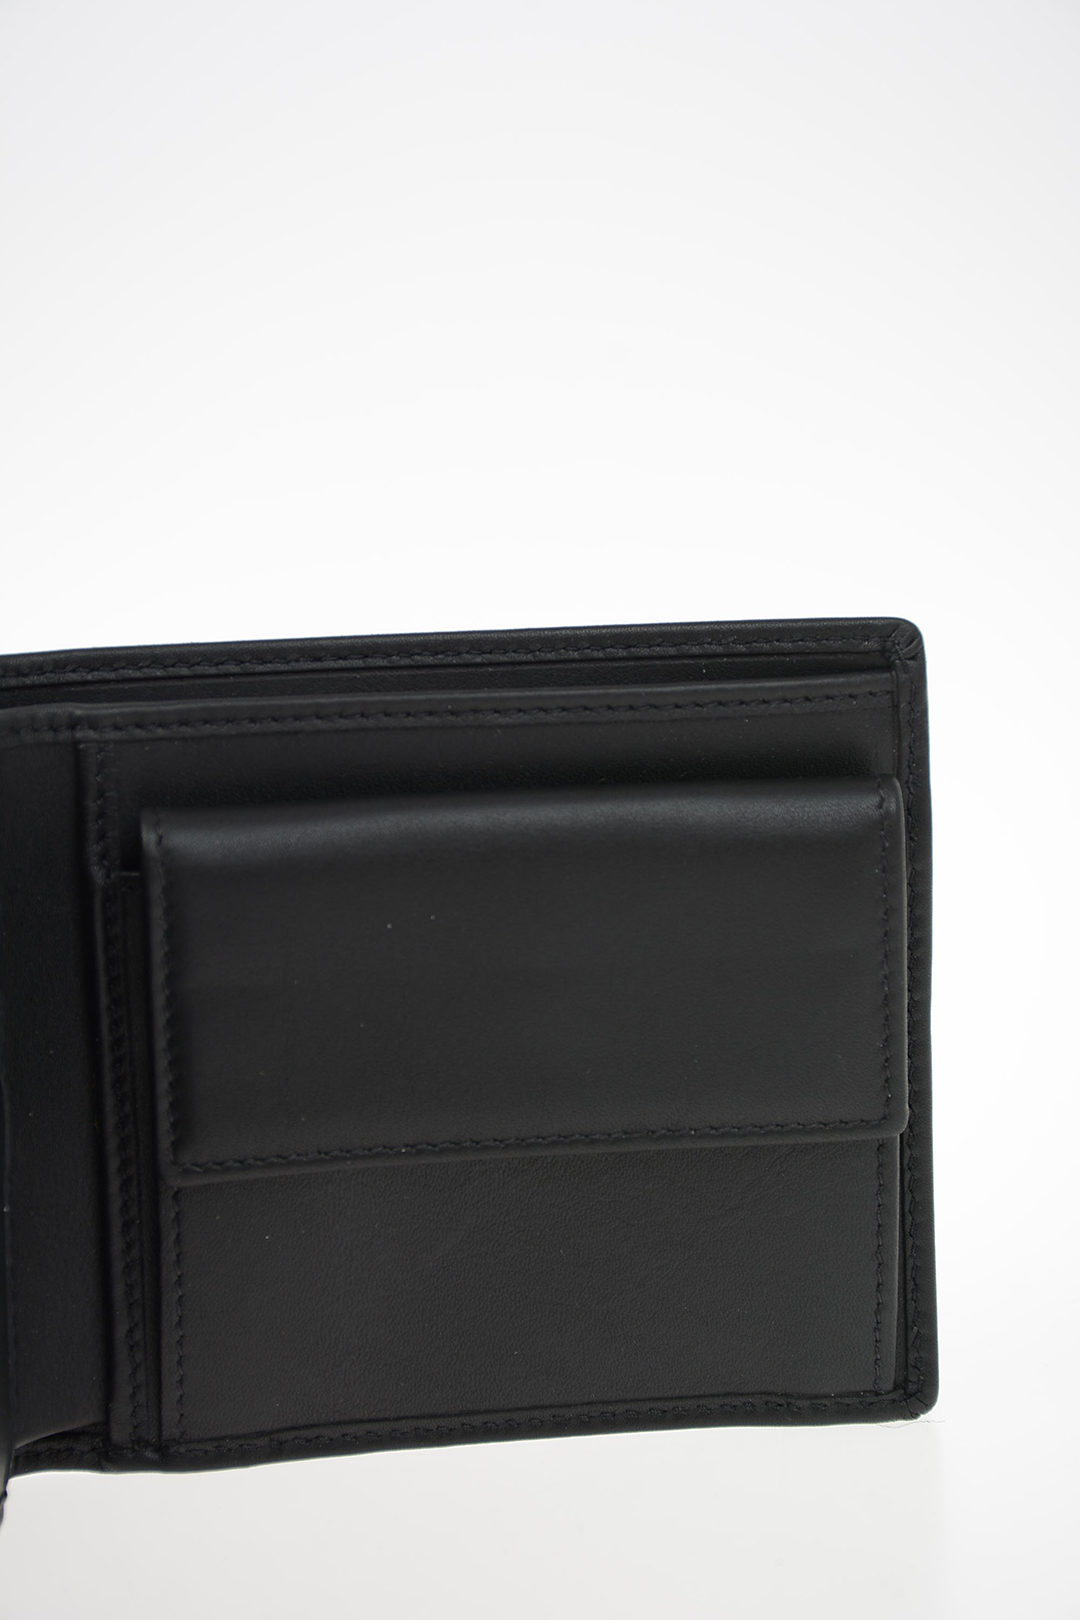 Armani GIORGIO ARMANI Leather Wallet men - Glamood Outlet